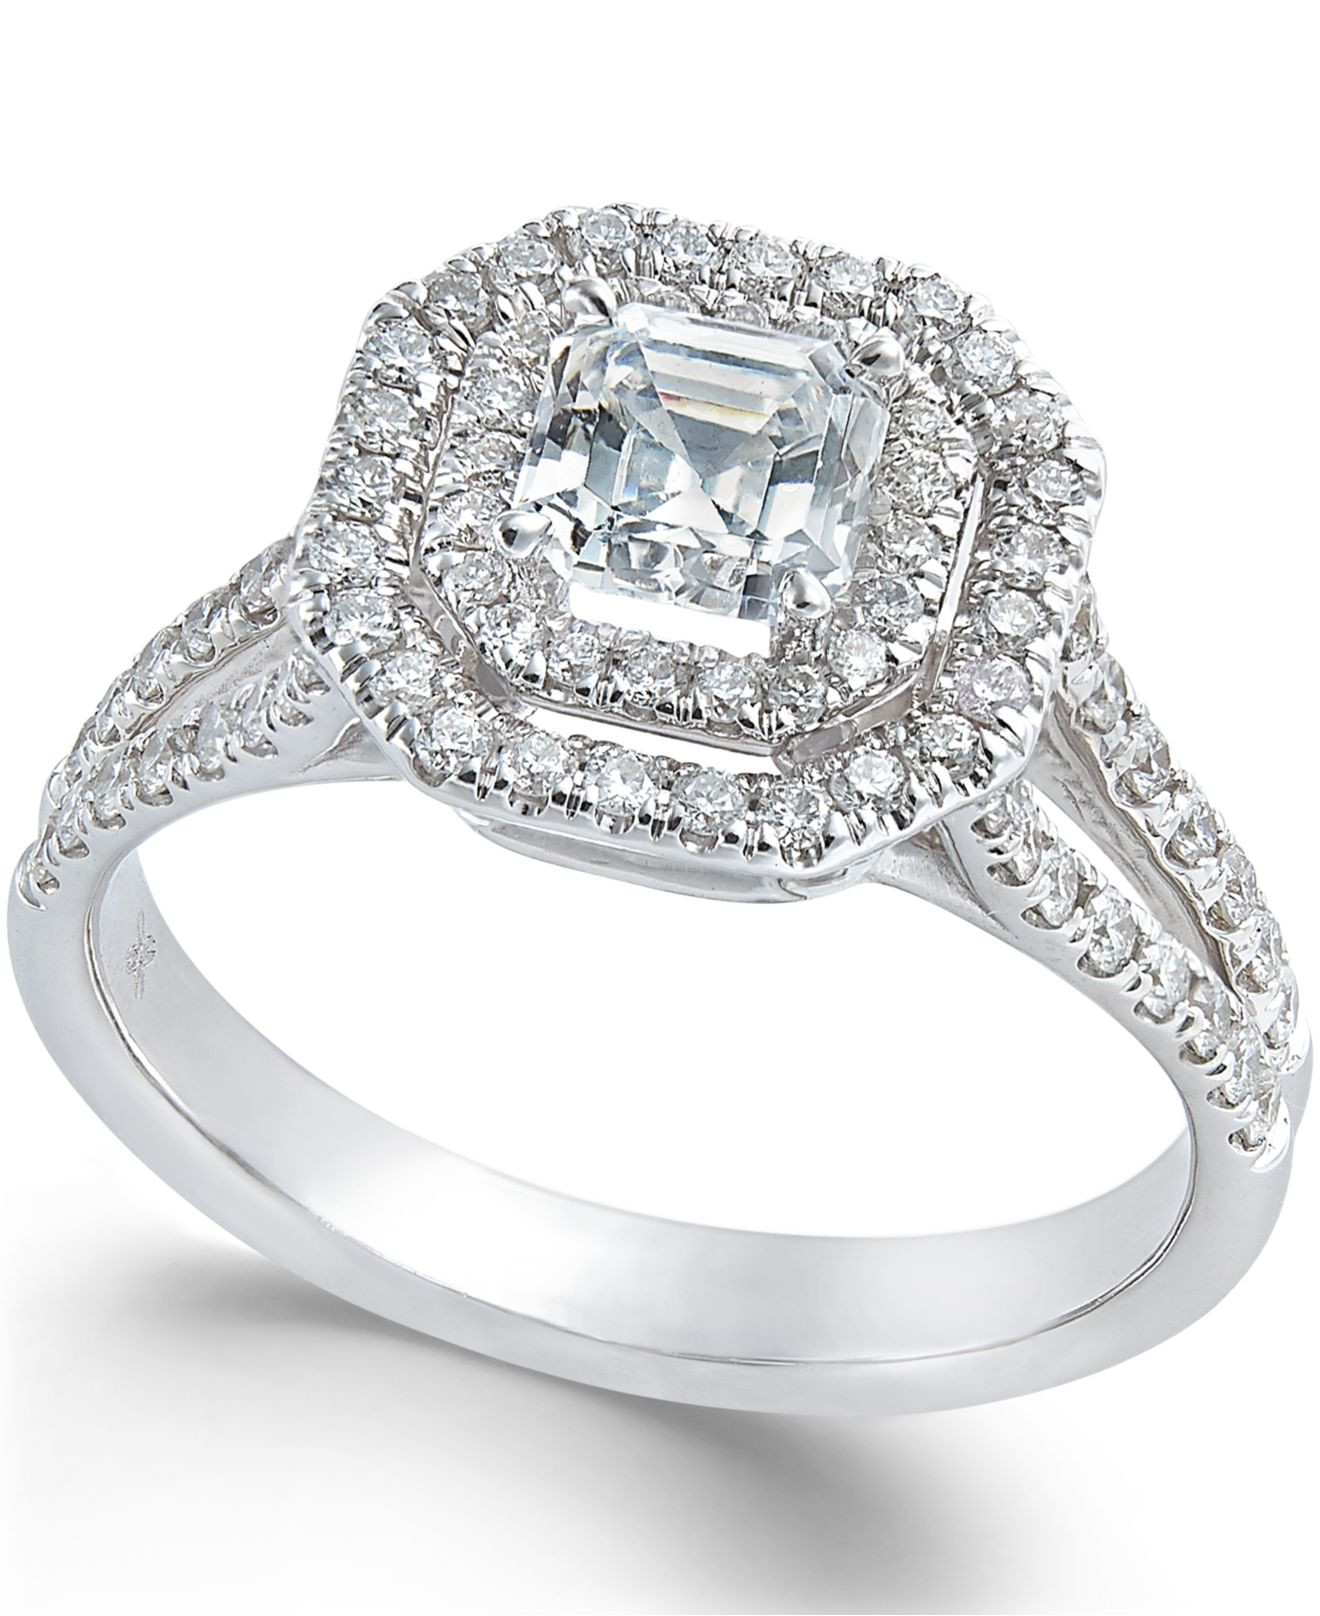 Macys Diamond Rings
 Macy s Diamond Halo Engagement Ring In 18k White Gold 1